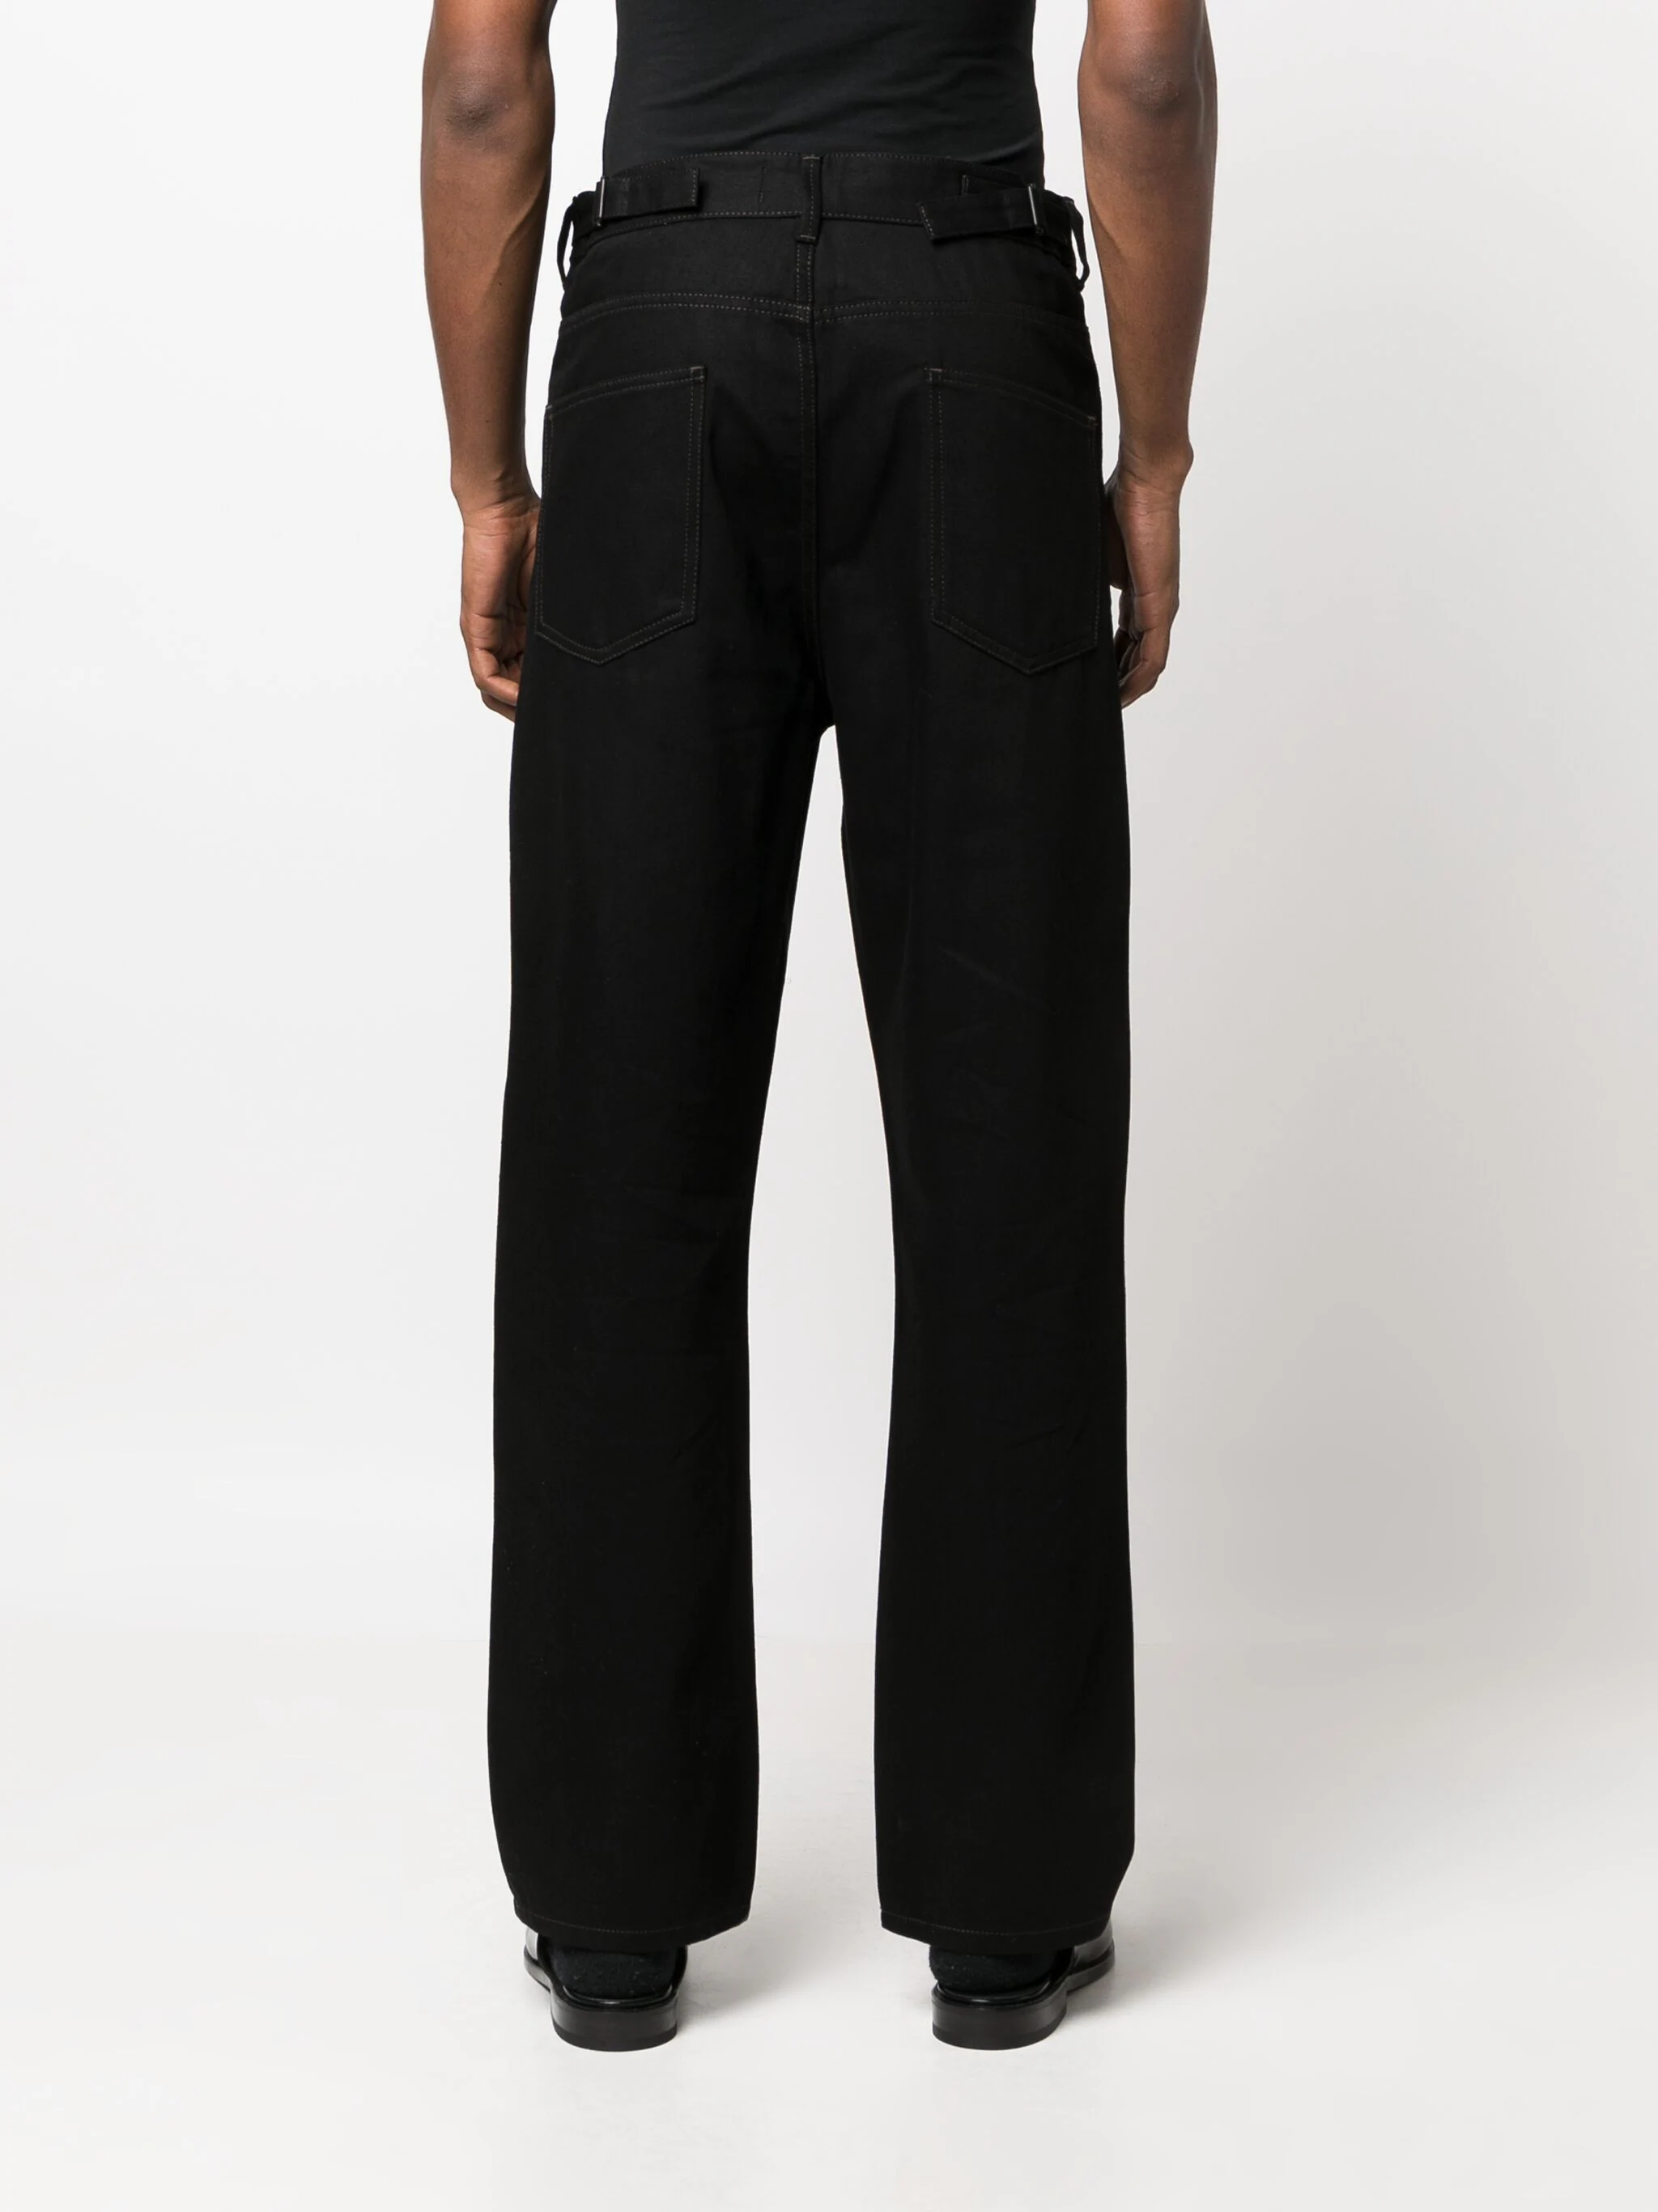 Lemaire Men Men's Curved 5 Pocket Pants — Clay White - ShopStyle